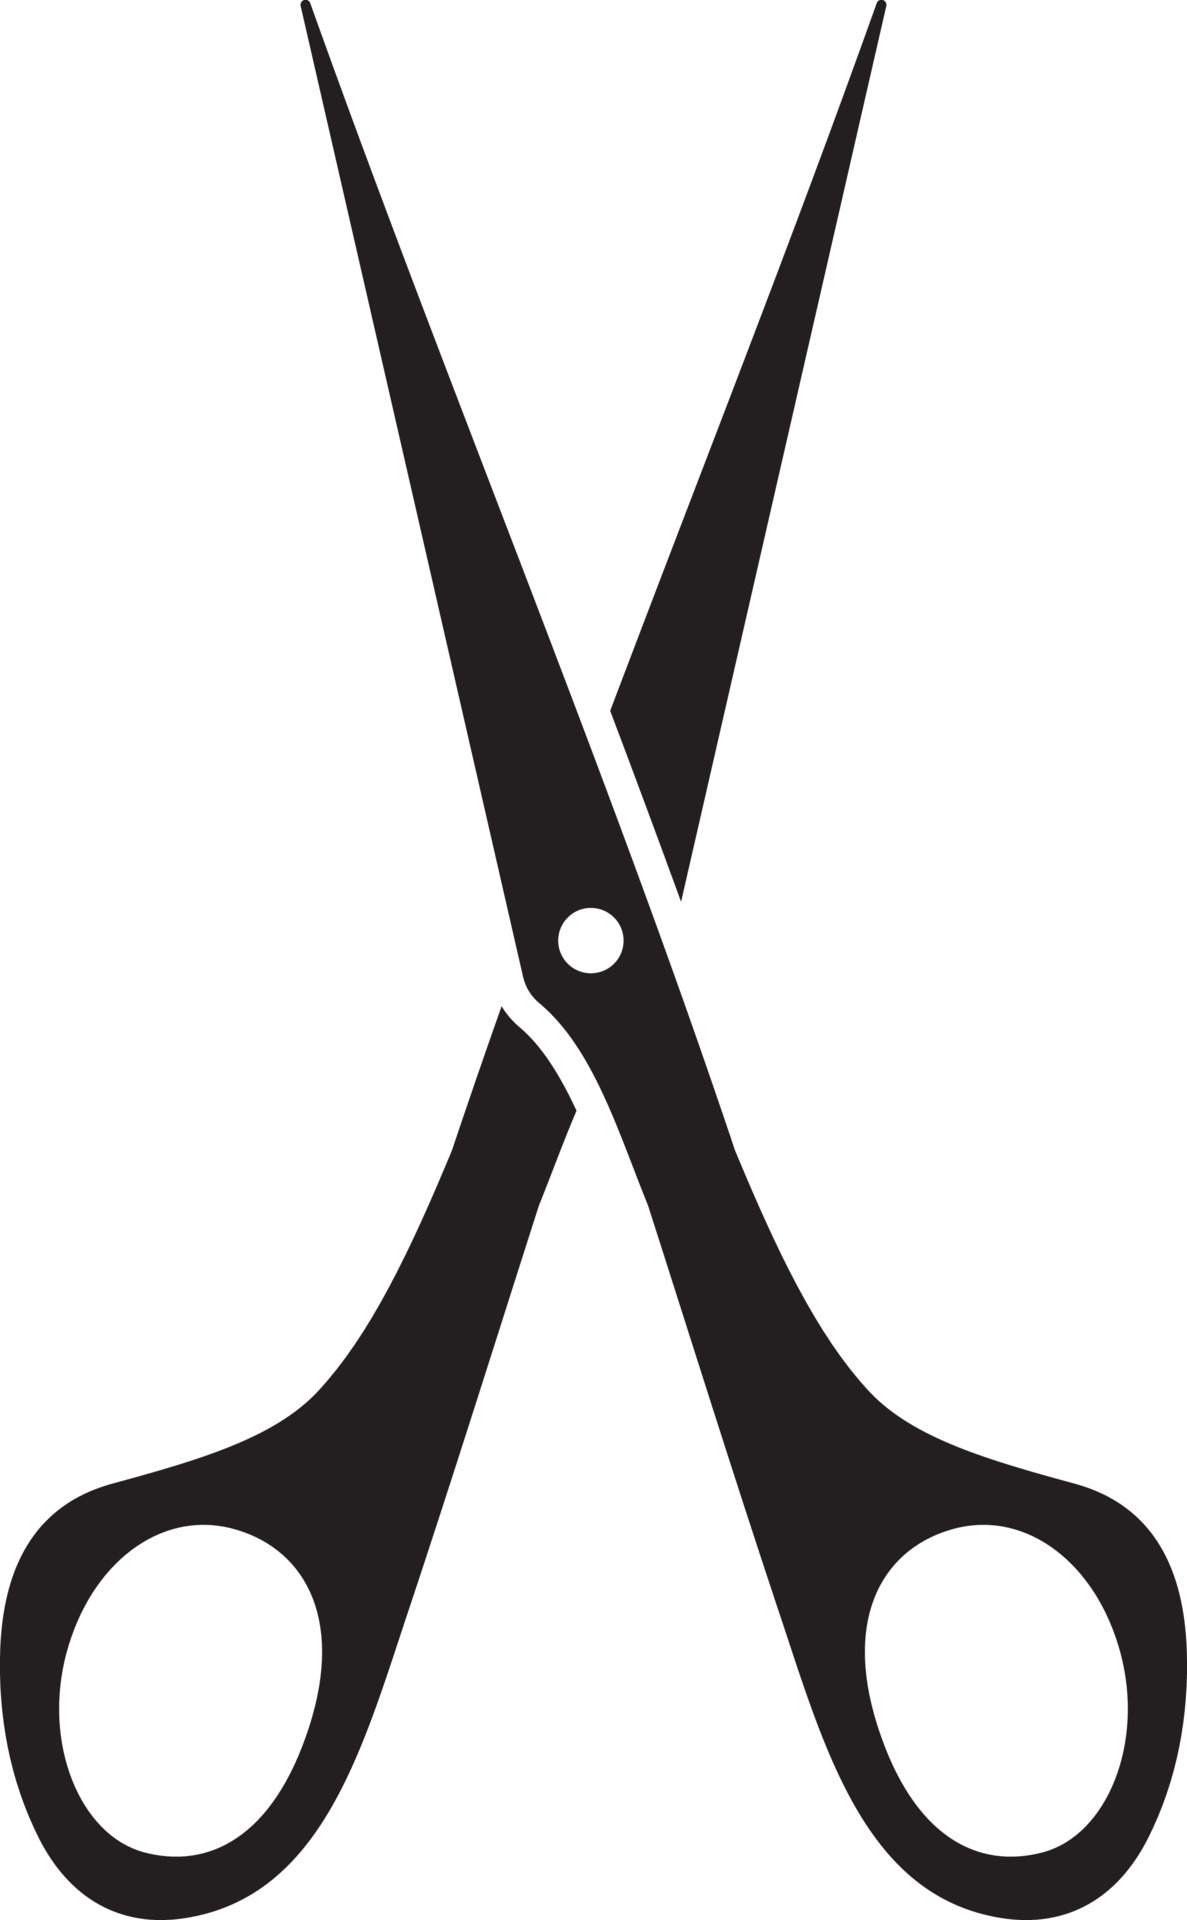 black scissors silhouette, Stock vector